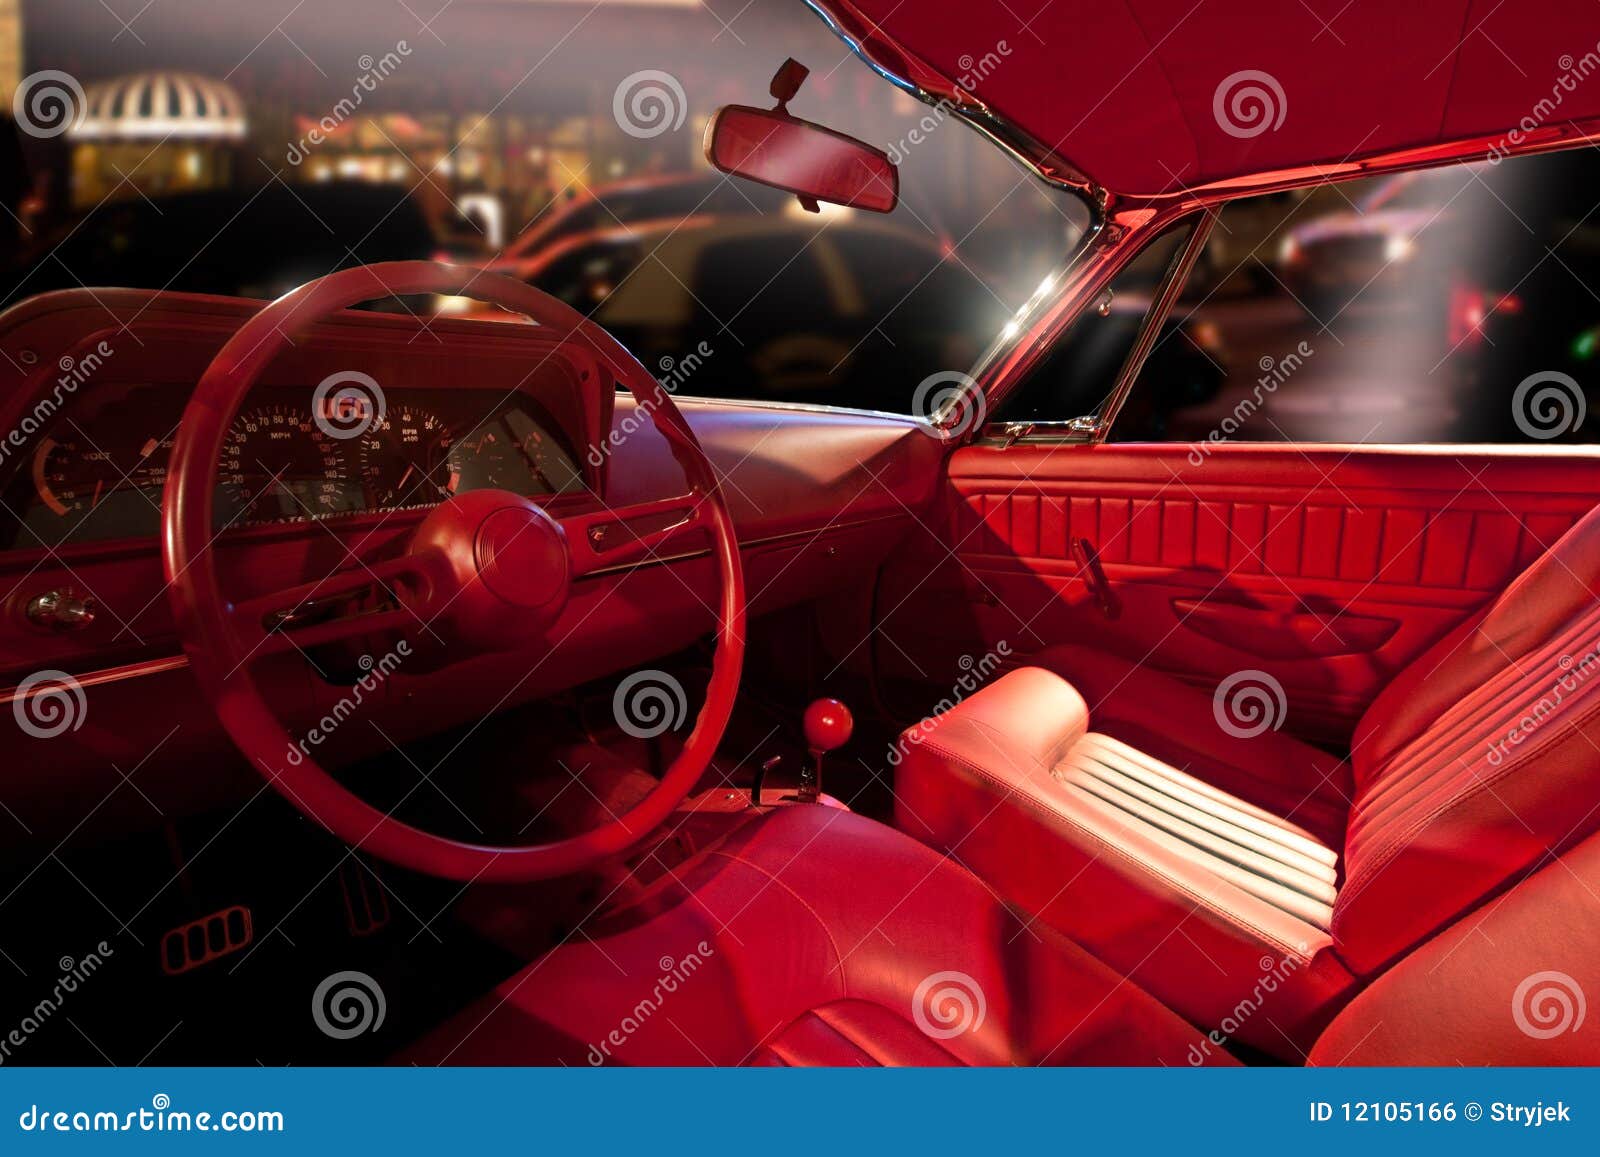 21,919 Roter Auto Innenraum Stock Fotos - Freie & Royalty-Free Stock Fotos  von Dreamstime